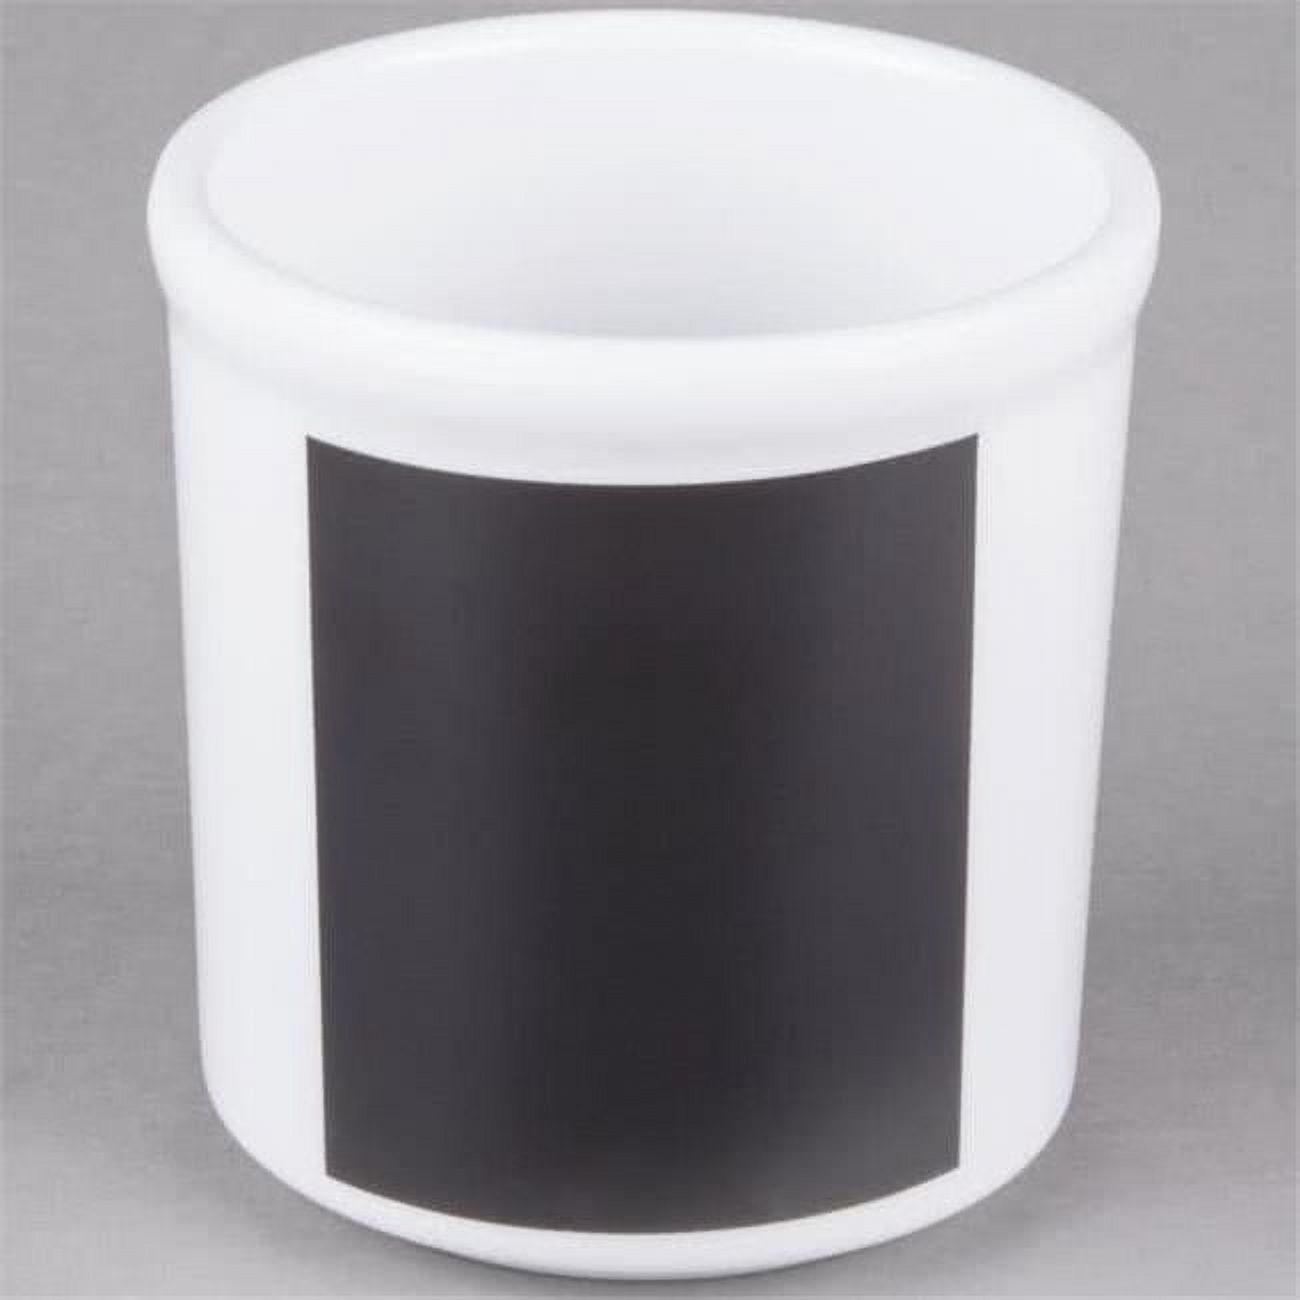 Cal-Mil Melamine Round Jar (Set of 5) - image 1 of 1